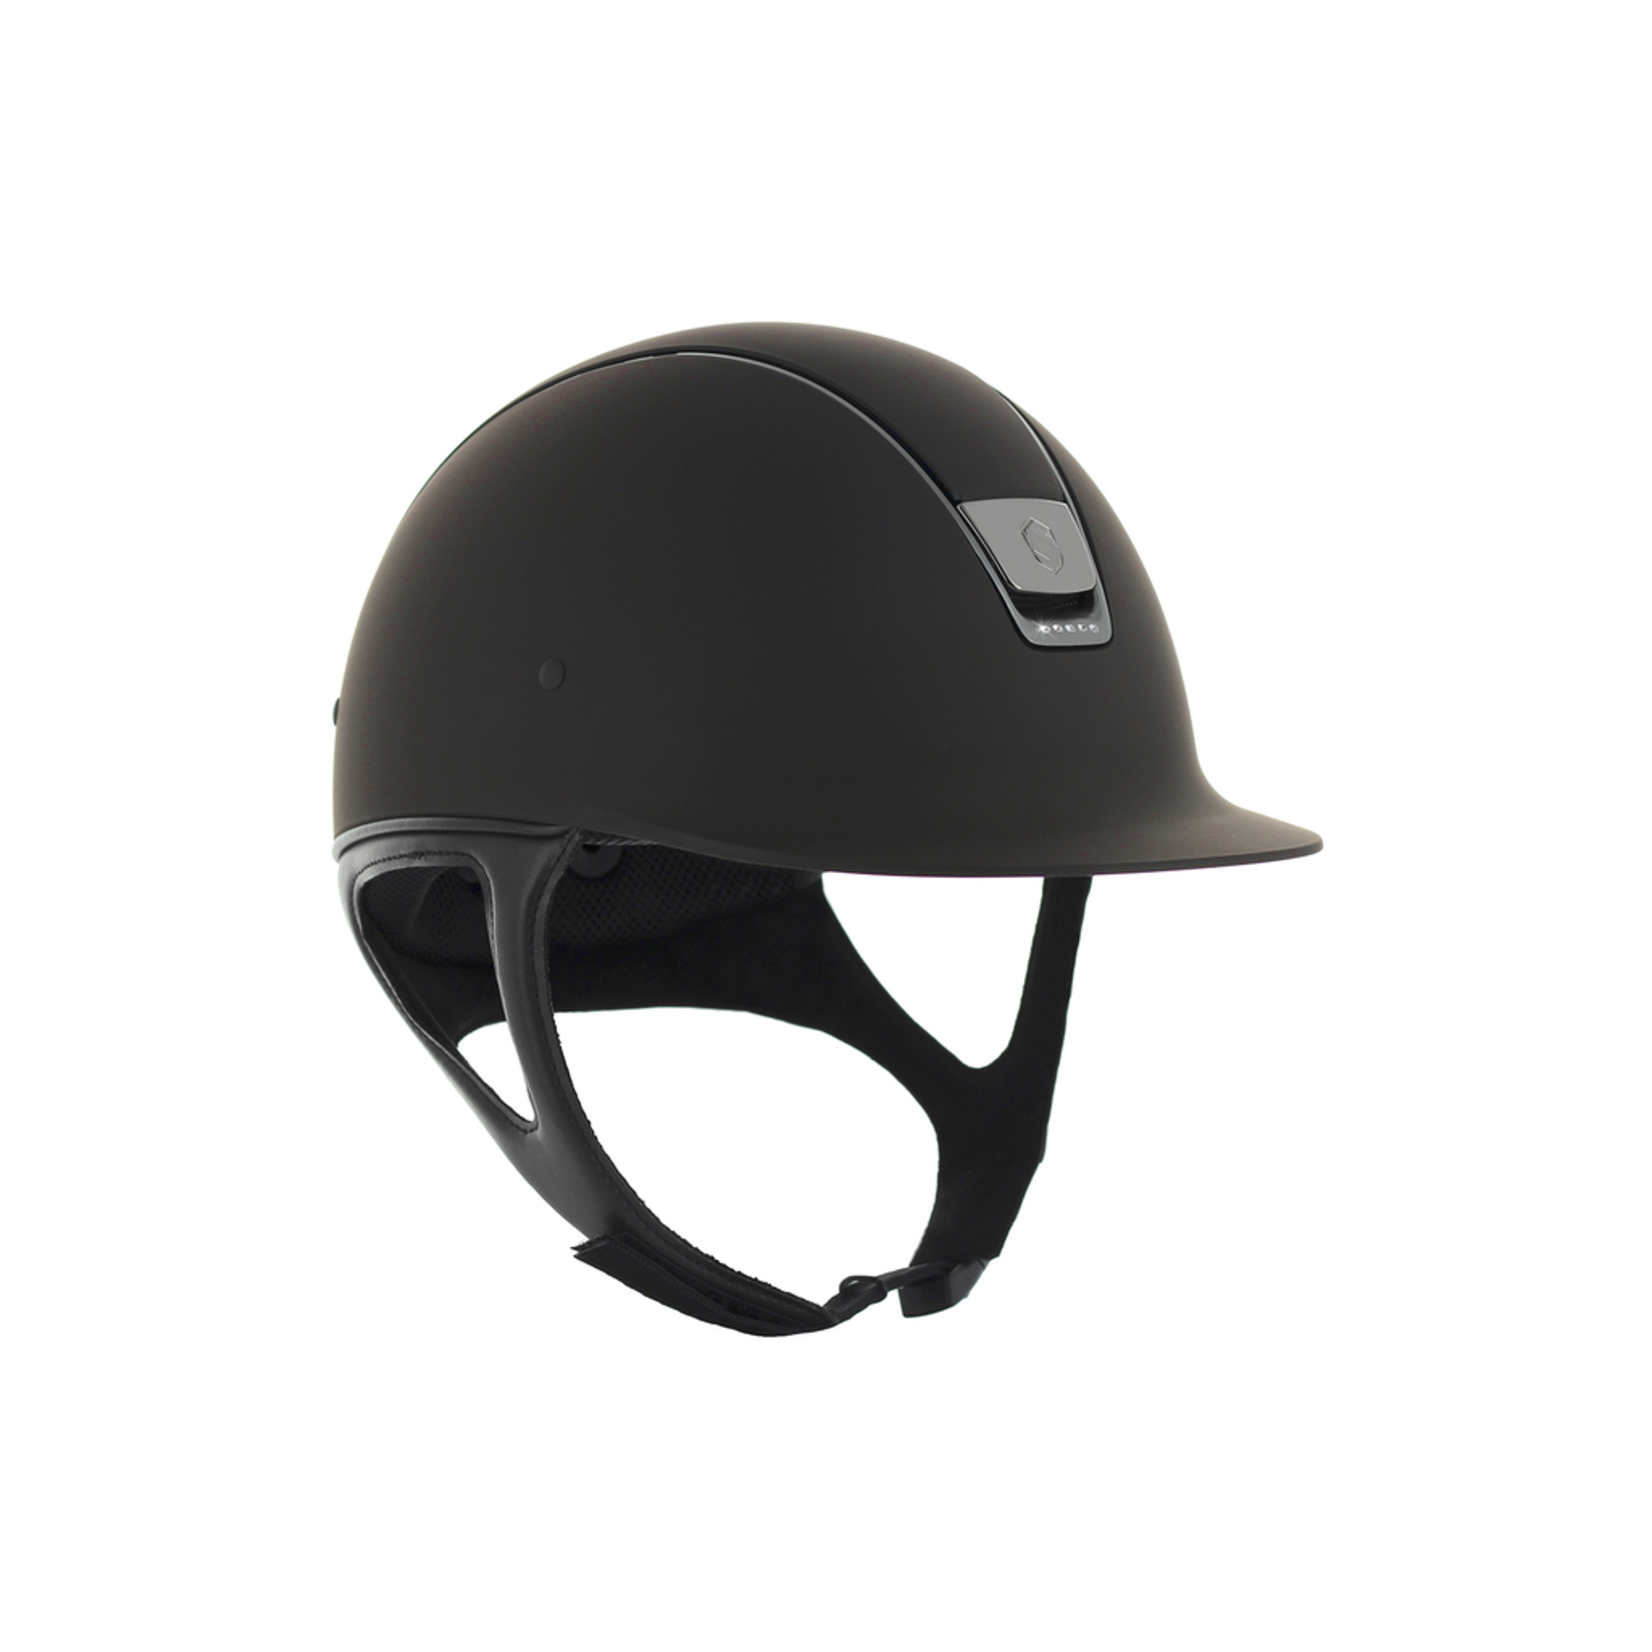 Samshield Samshield ShadowMatt Helmet w/5 Front Swarovski Crystals w/Titanium Trim, Sold as a kit with coordinating liner (sold separately).